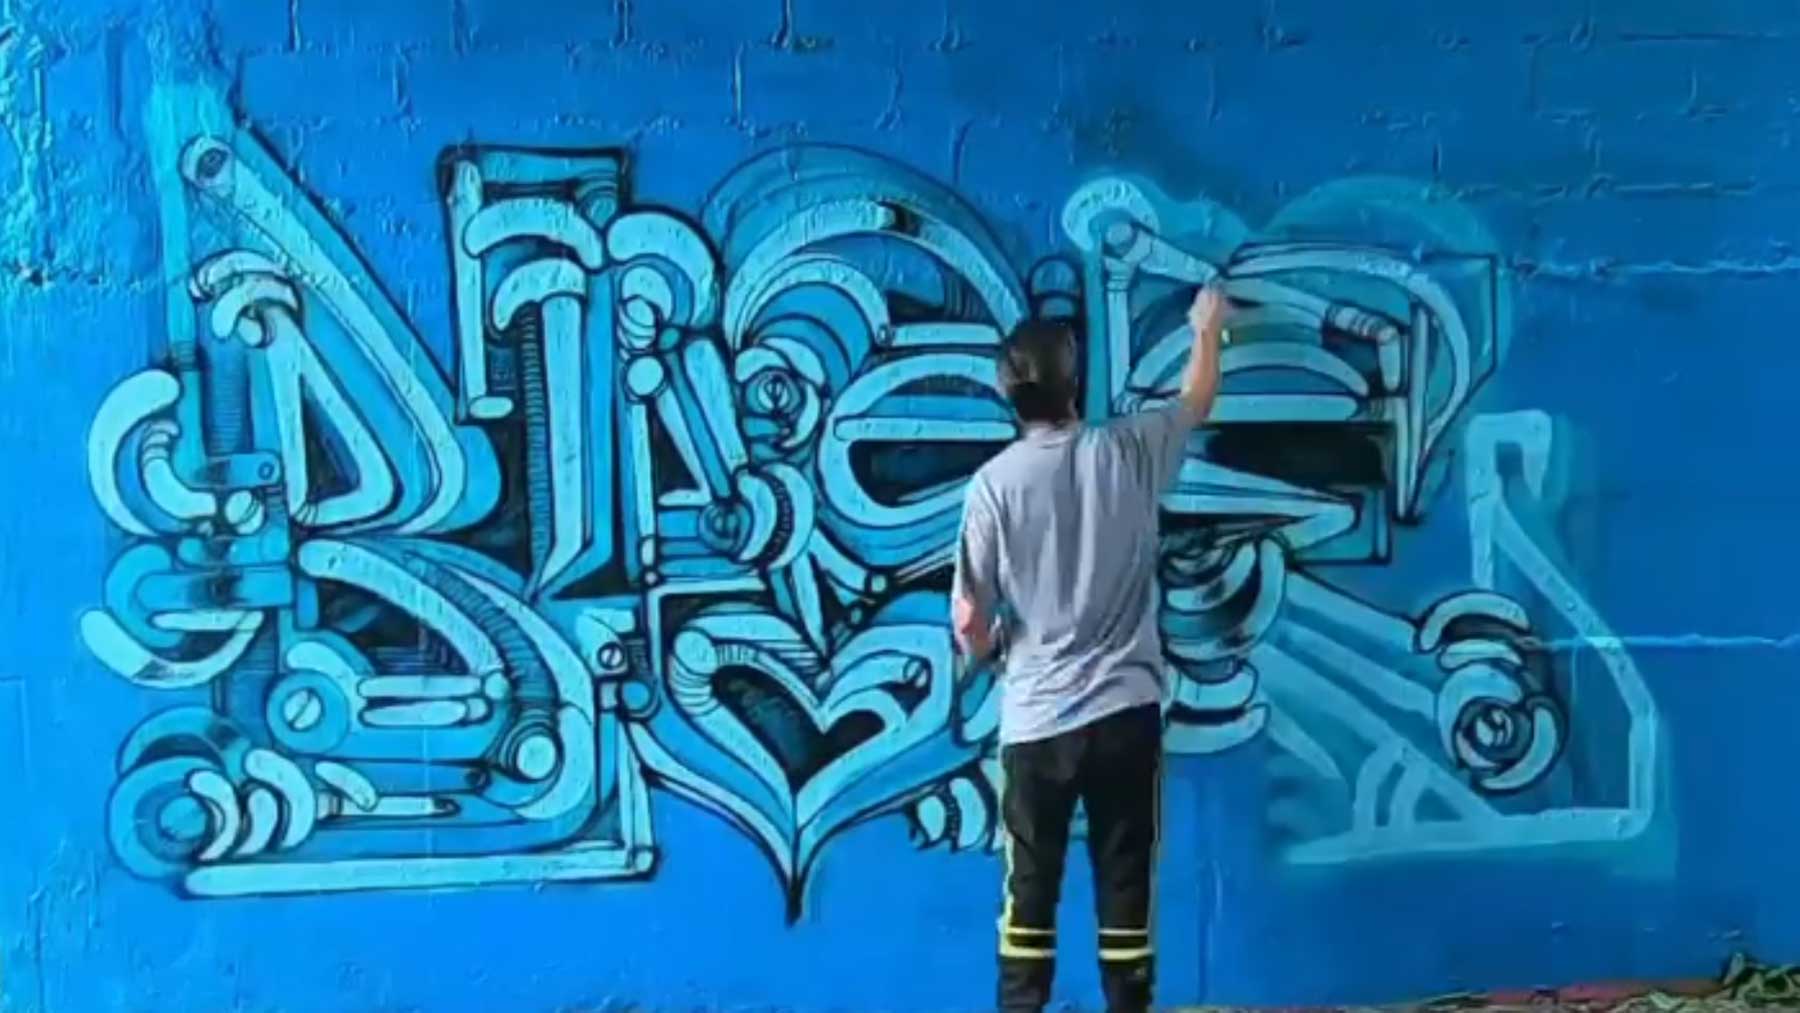 Timelapse: 55 Minuten Graffiti-Sprühen in unter 1 Minute